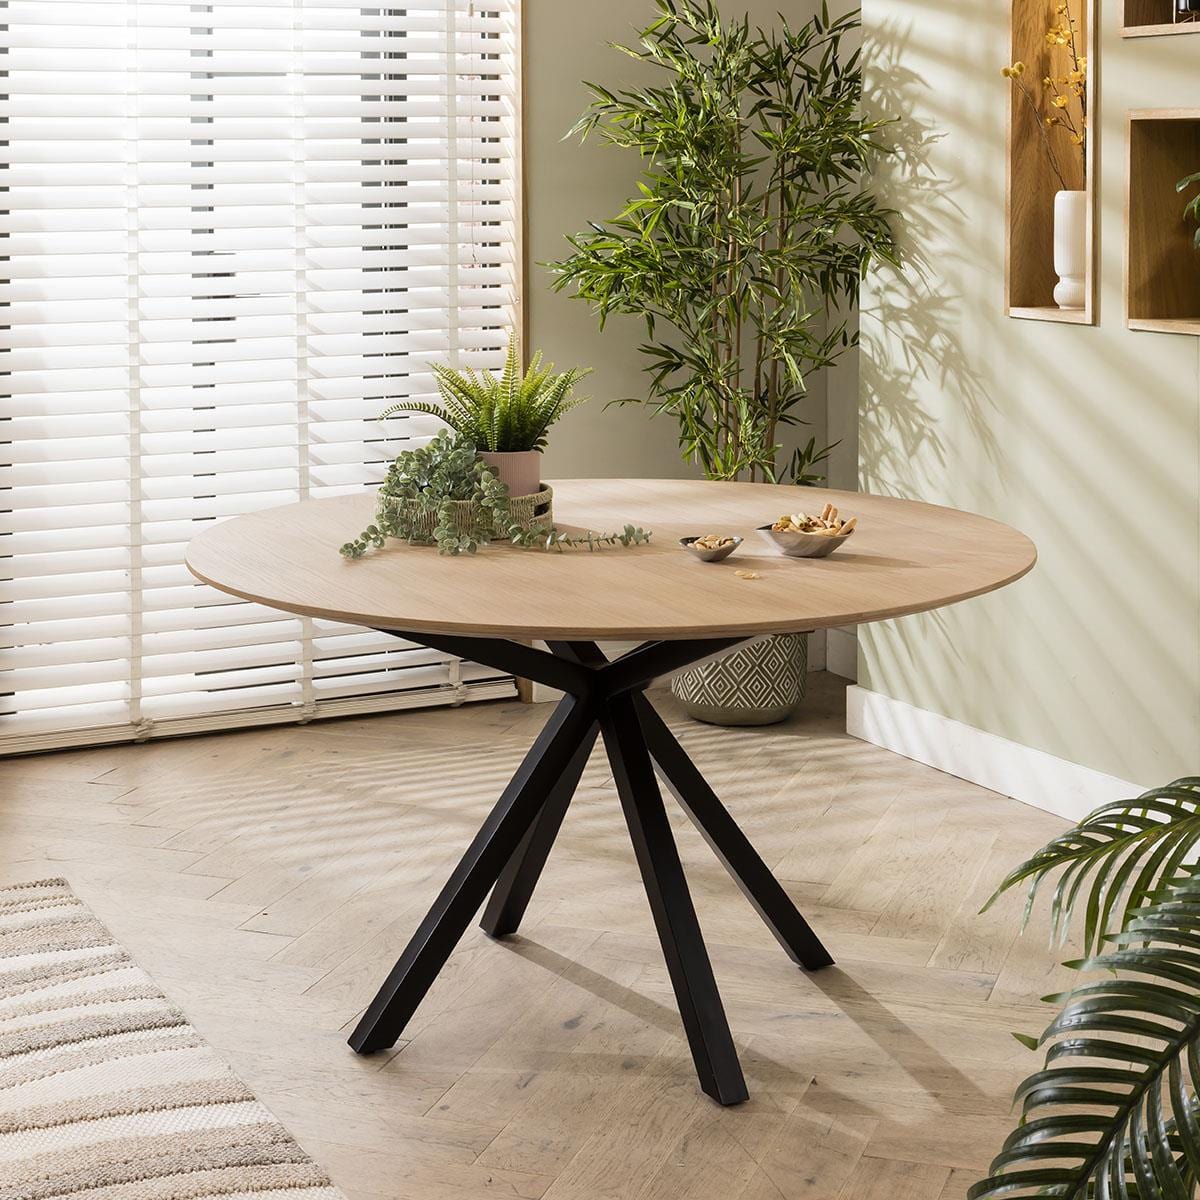 Quatropi Virgo 6 Seater Solid Wooden Round Dining Table Natural 140cm